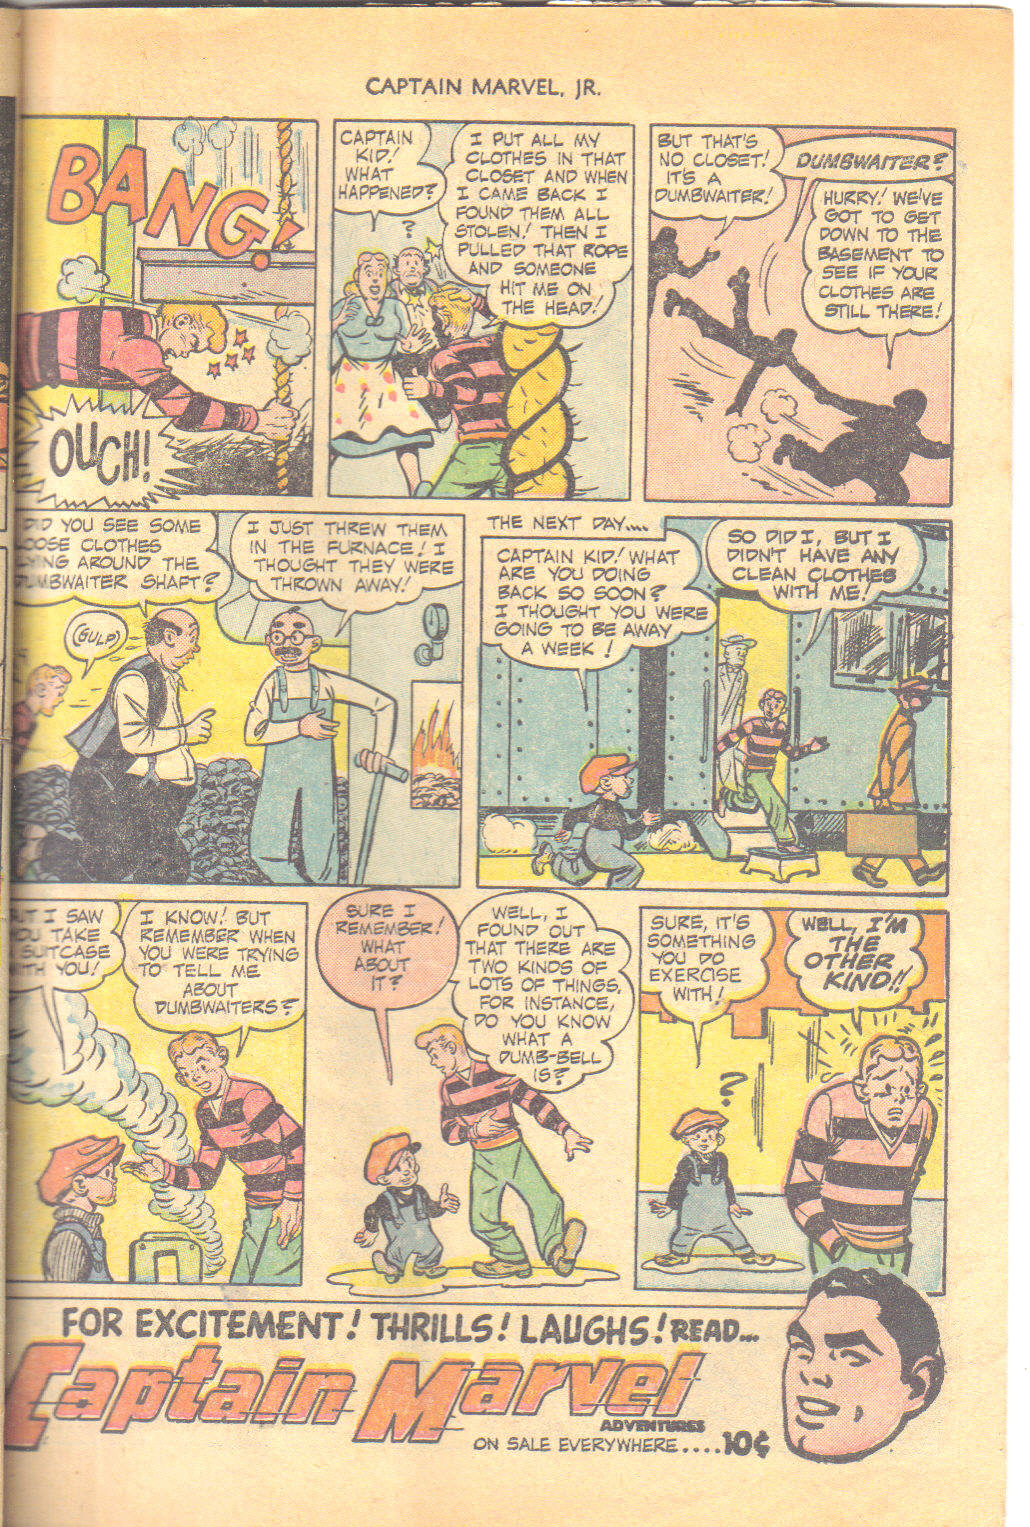 Read online Captain Marvel, Jr. comic -  Issue #90 - 27